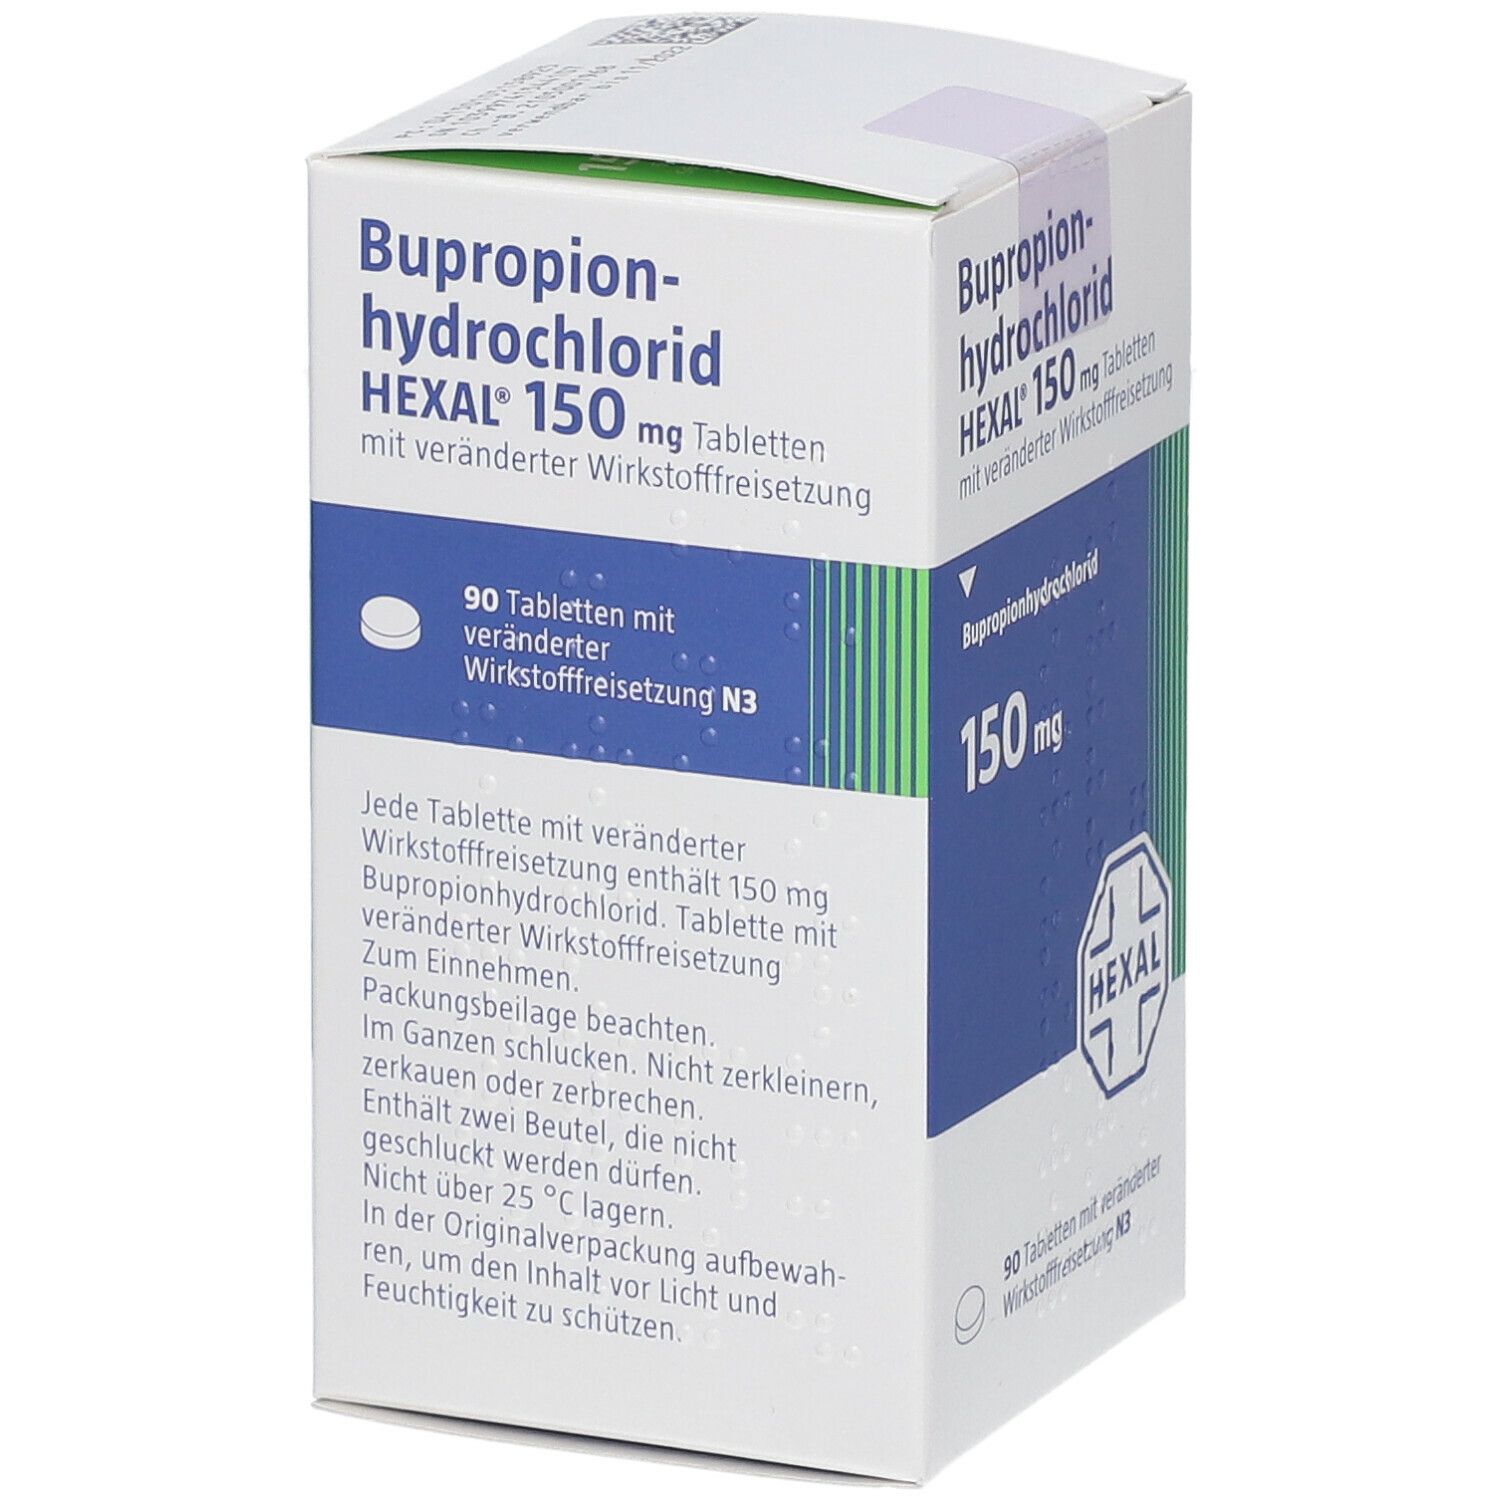 Bupropionhydrochlorid HEXAL® 150 mg